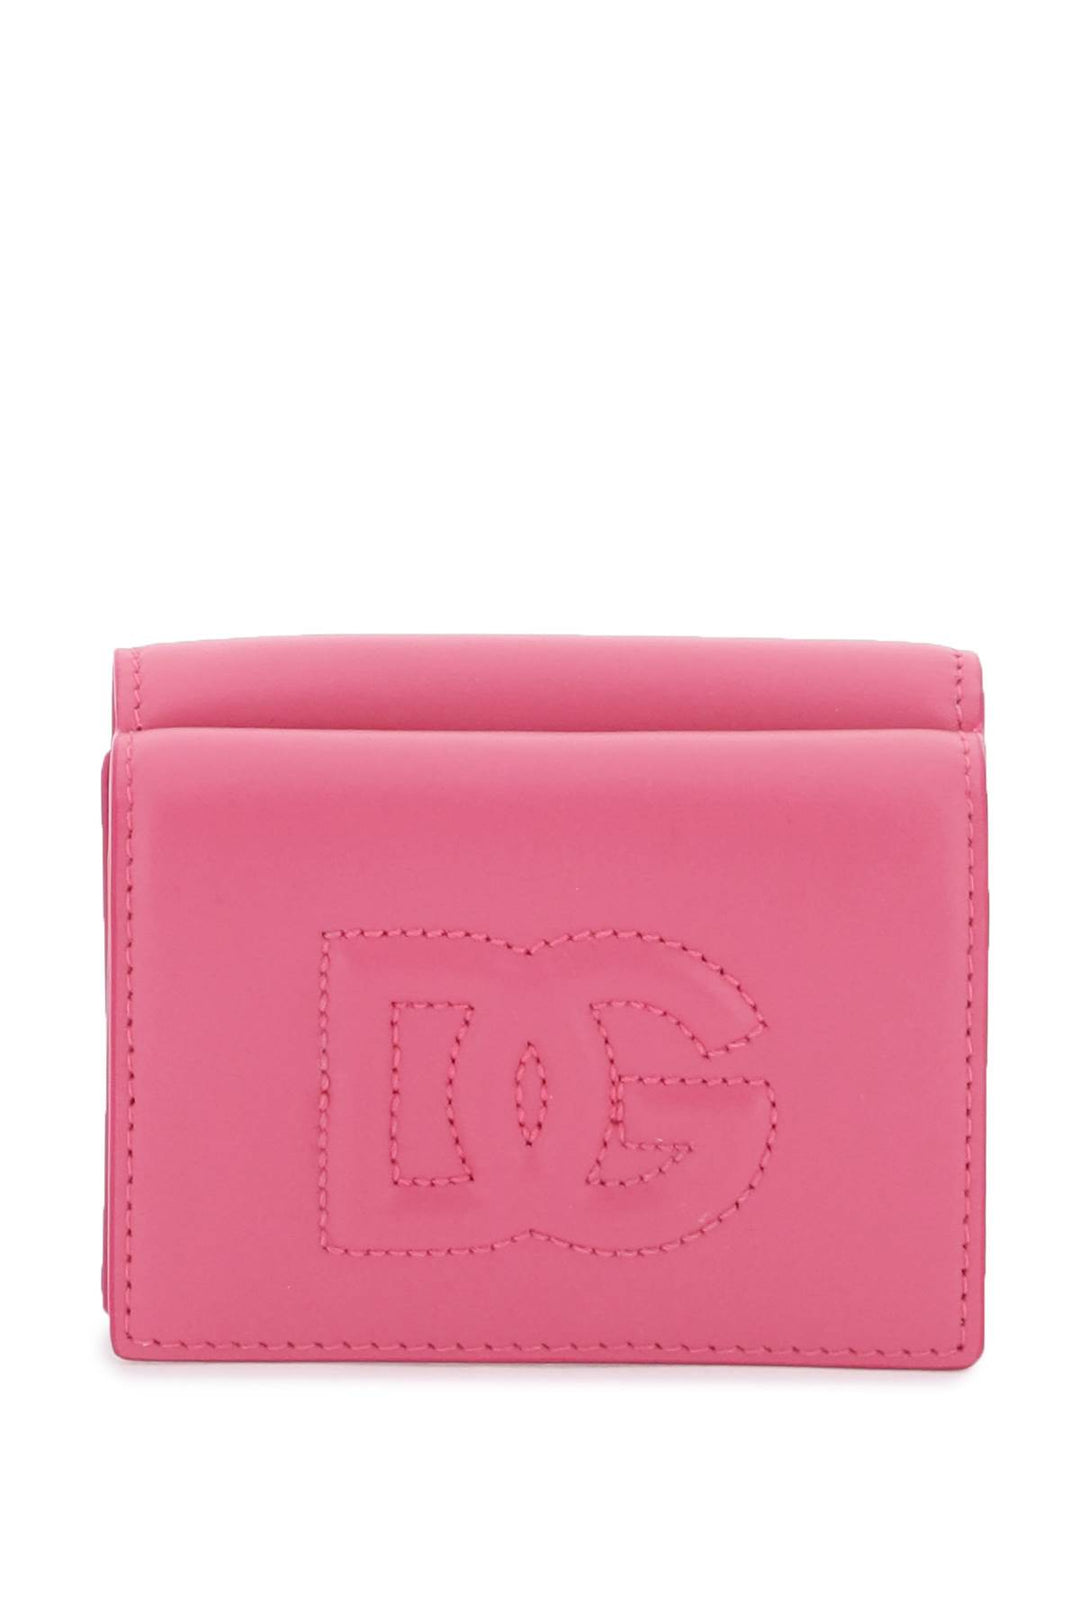 Dolce & Gabbana Dg Logo French Flap Wallet   Fuxia